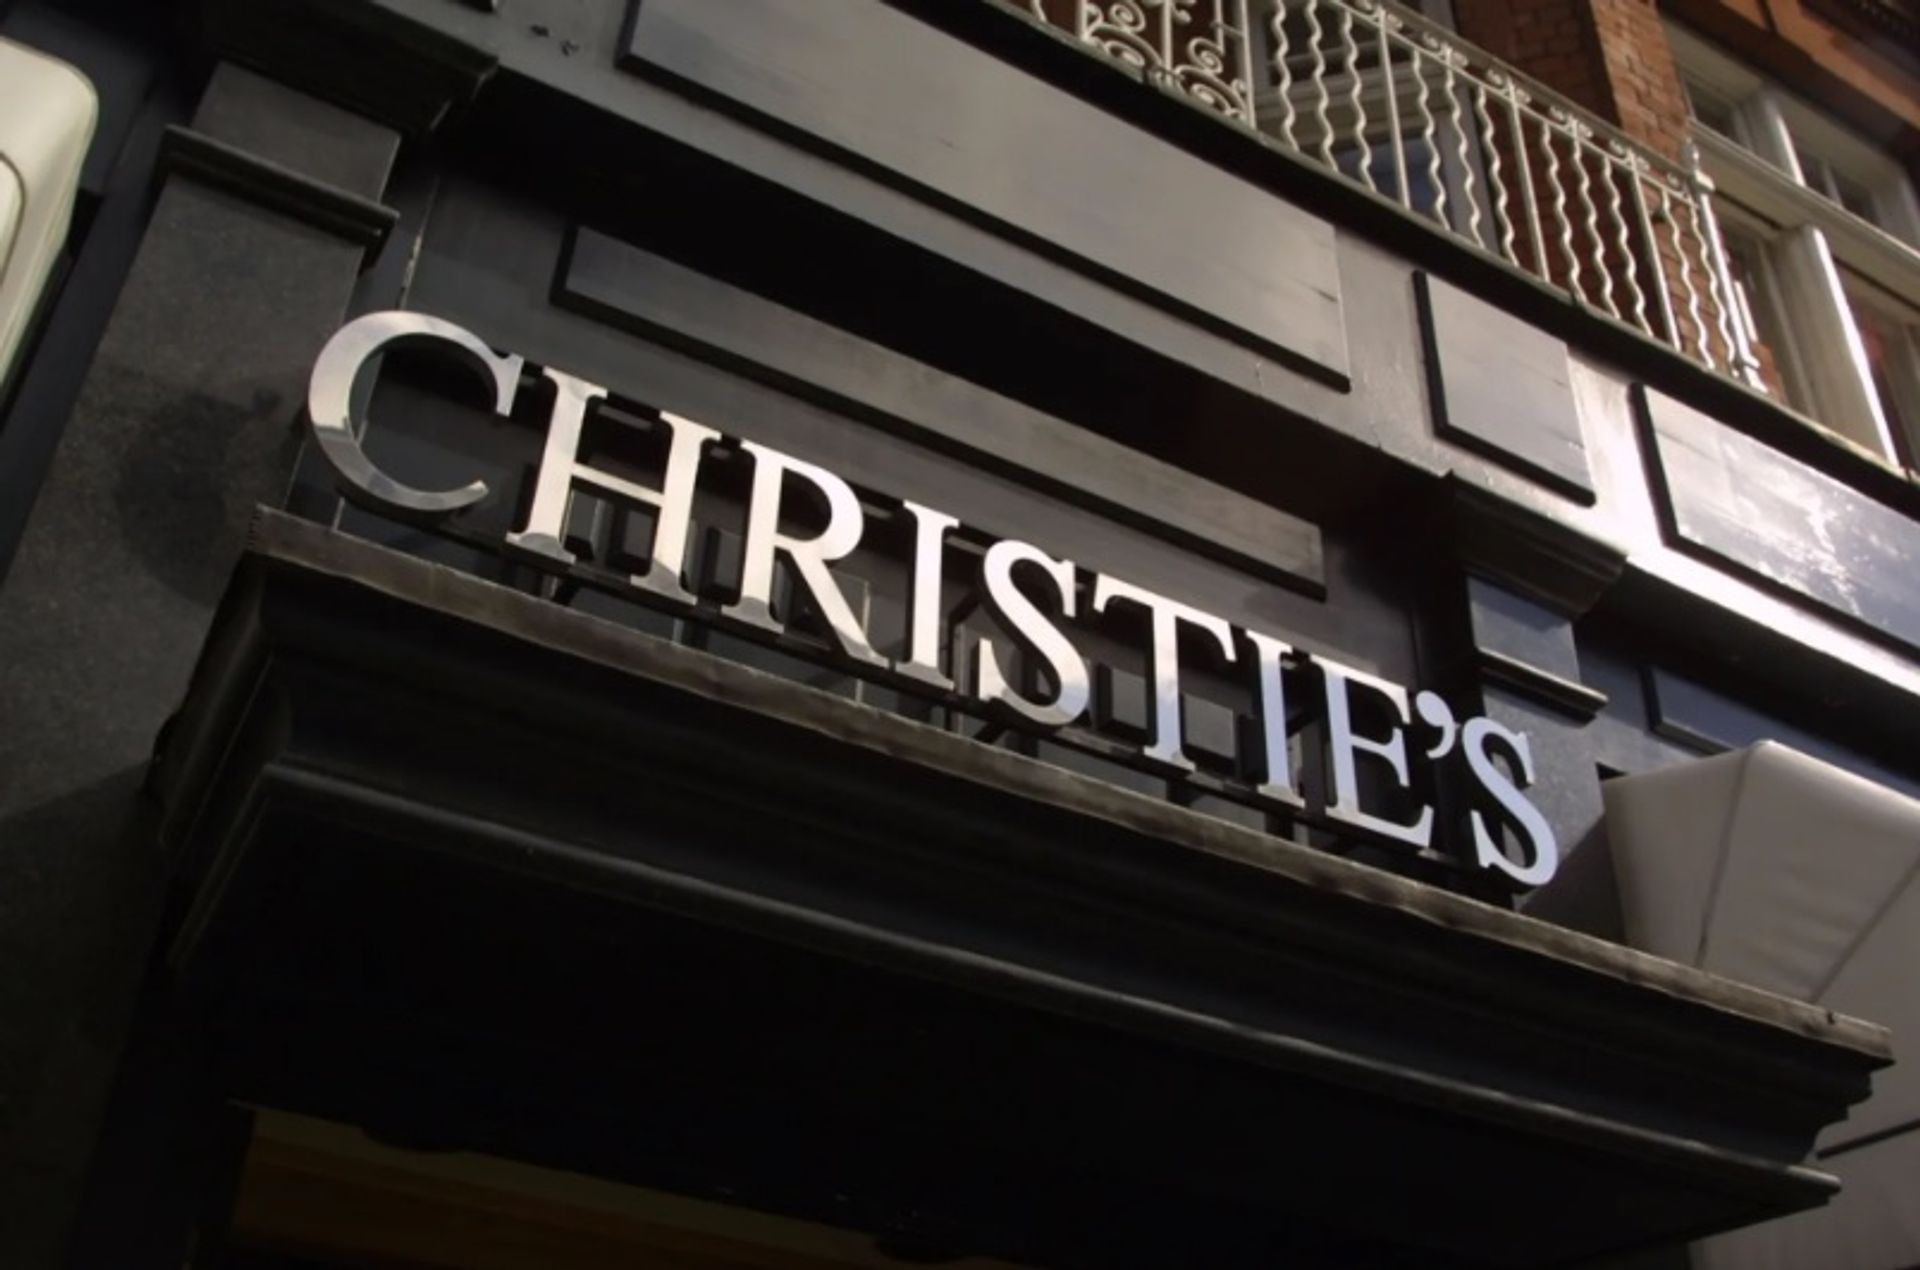 Christie's השיקה פלטפורמת השקעות טכנולוגית חדשה

© Getty Images